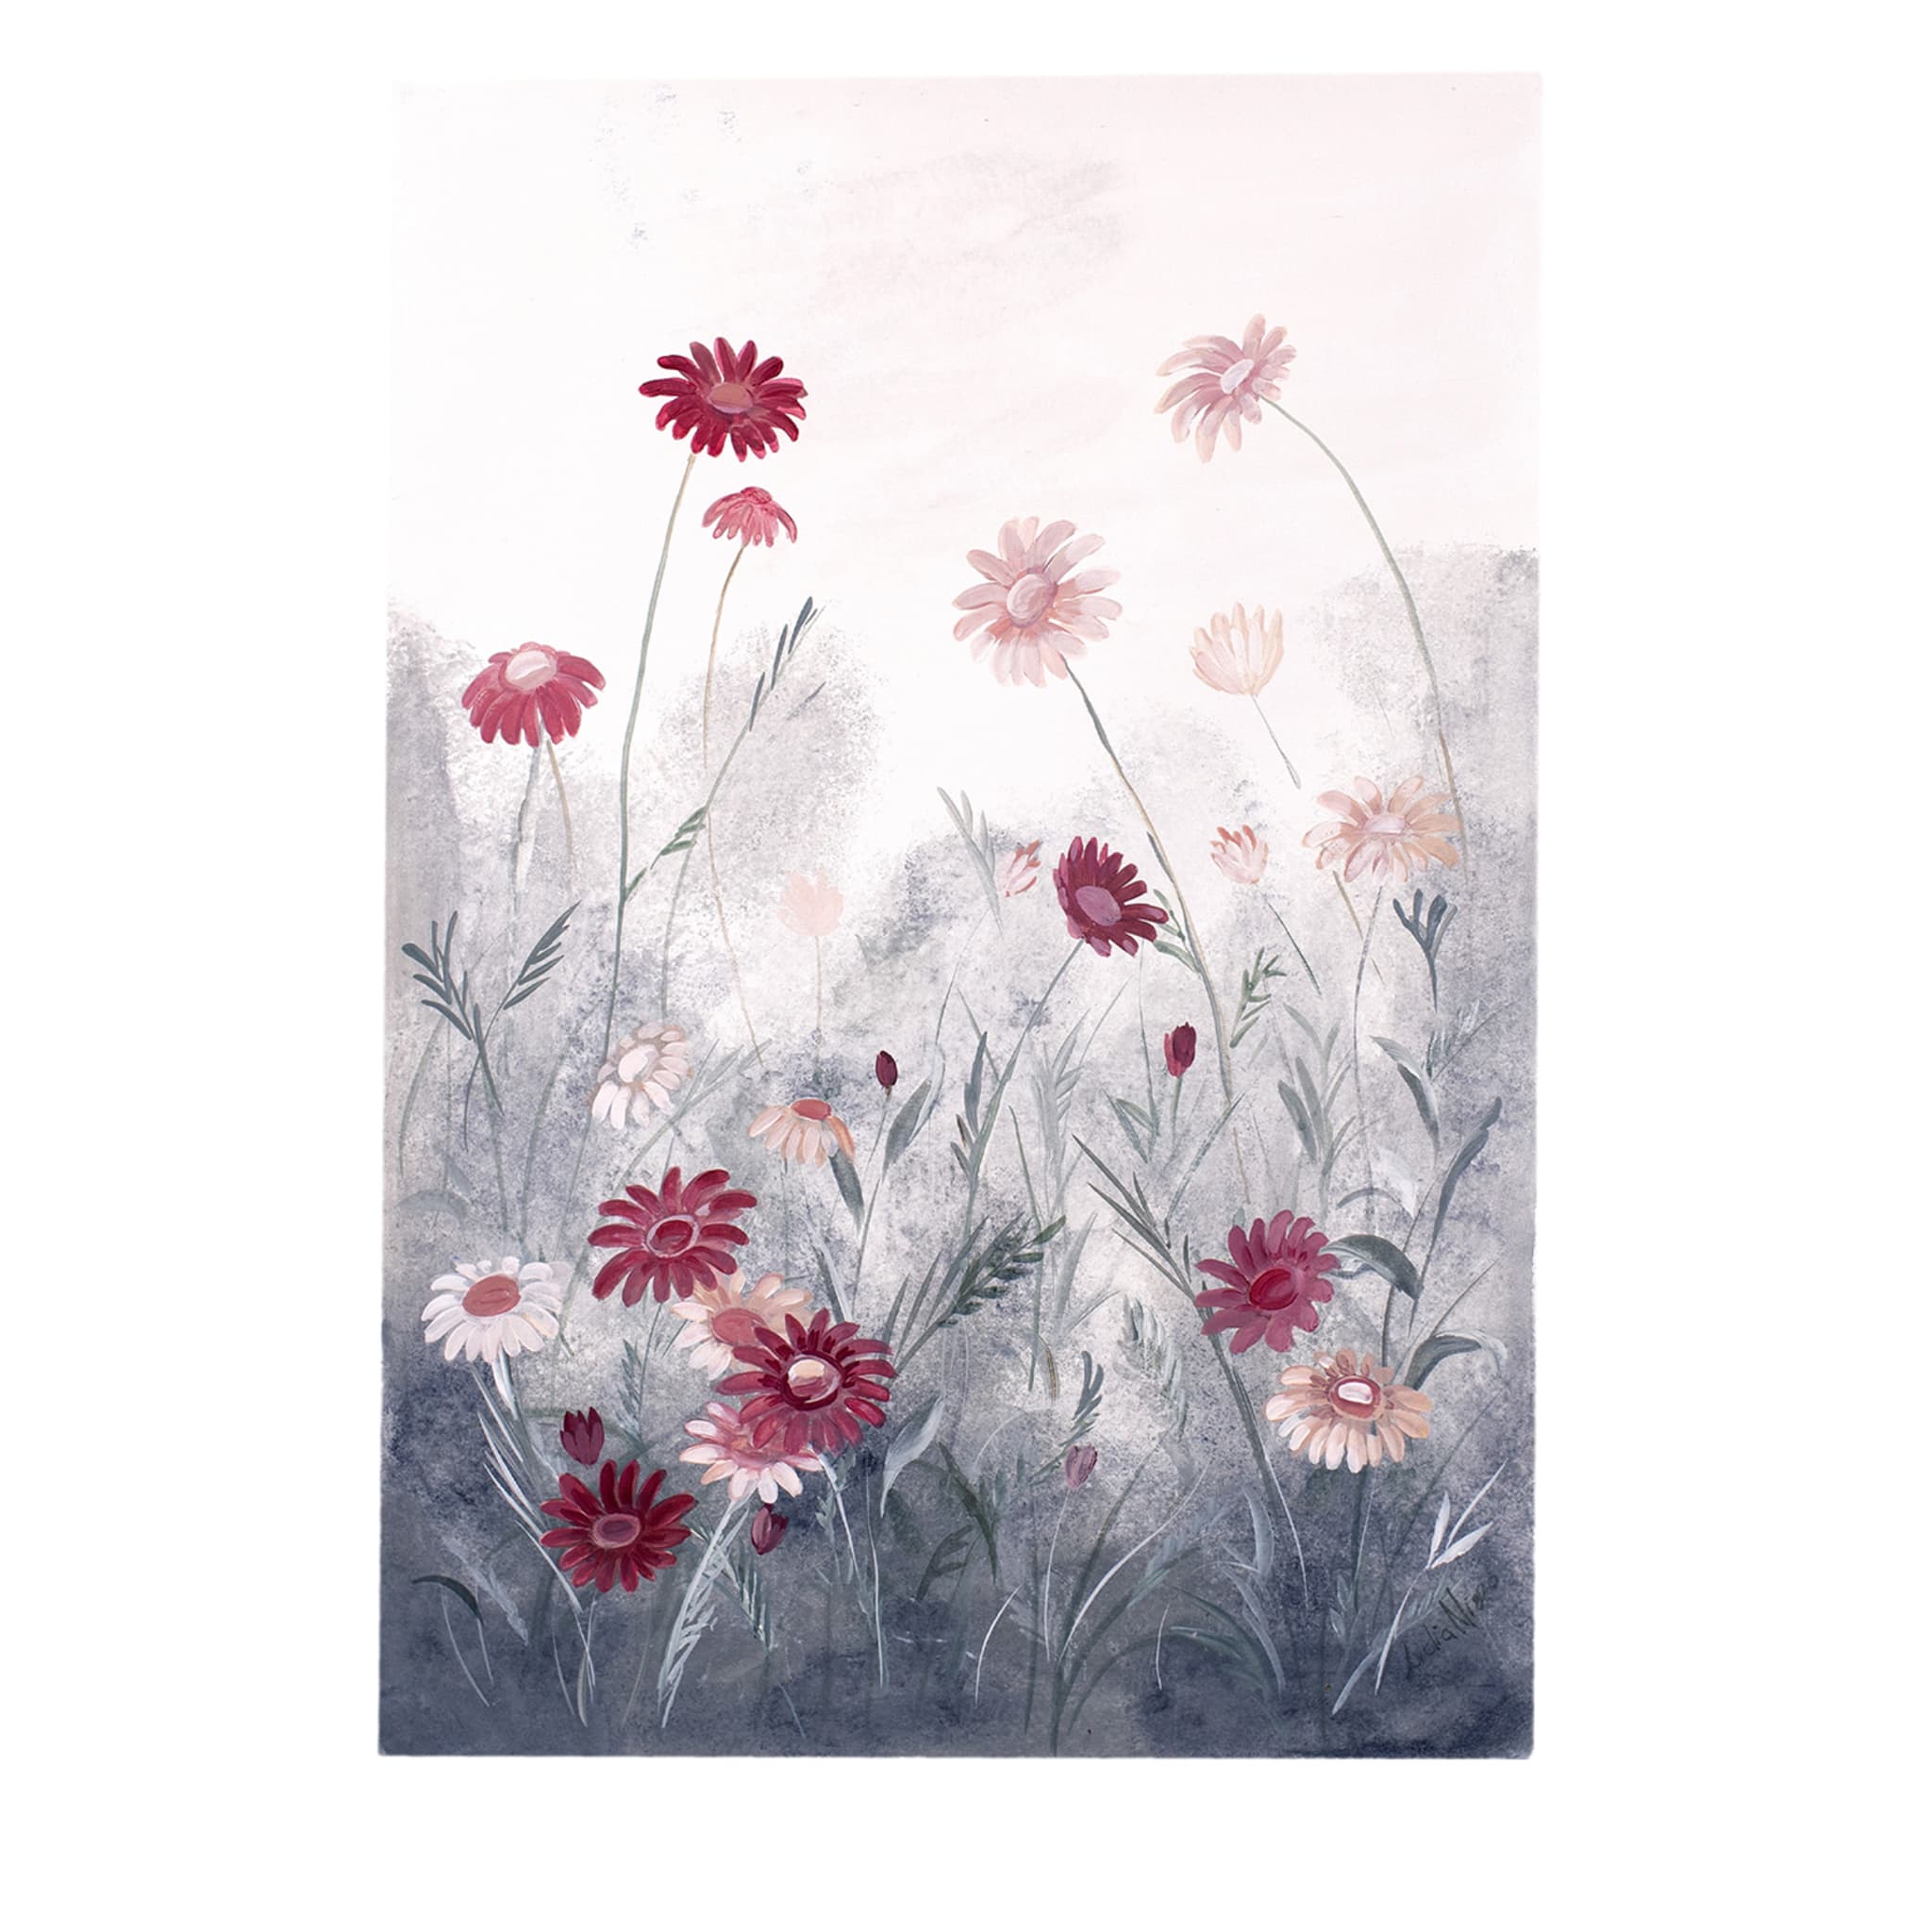 Flowers Wallpaper #3 - Main view